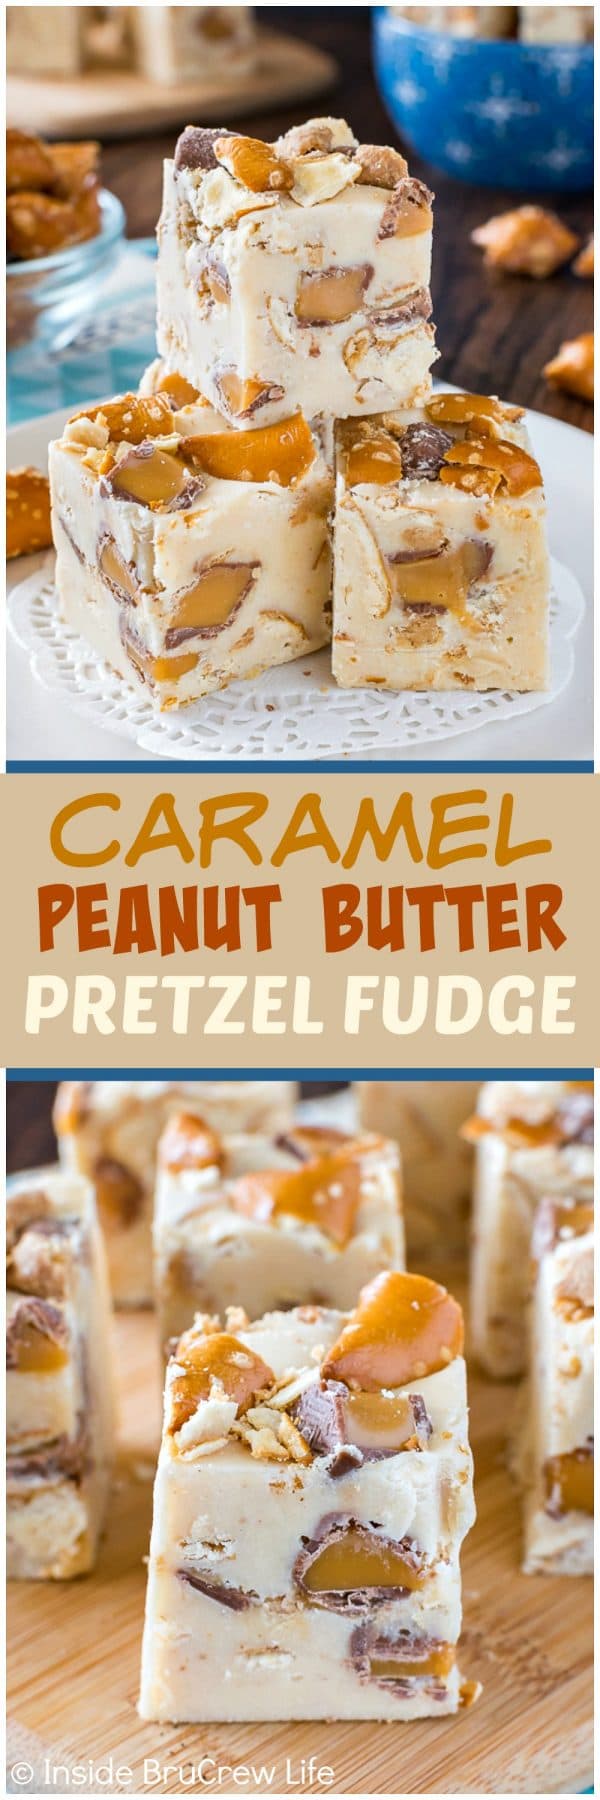 Caramel Peanut Butter Pretzel Fudge - swirls of candy bars and pretzels inside a creamy peanut butter fudge add a fun crunch! Great no bake dessert recipe that is ready in minutes!